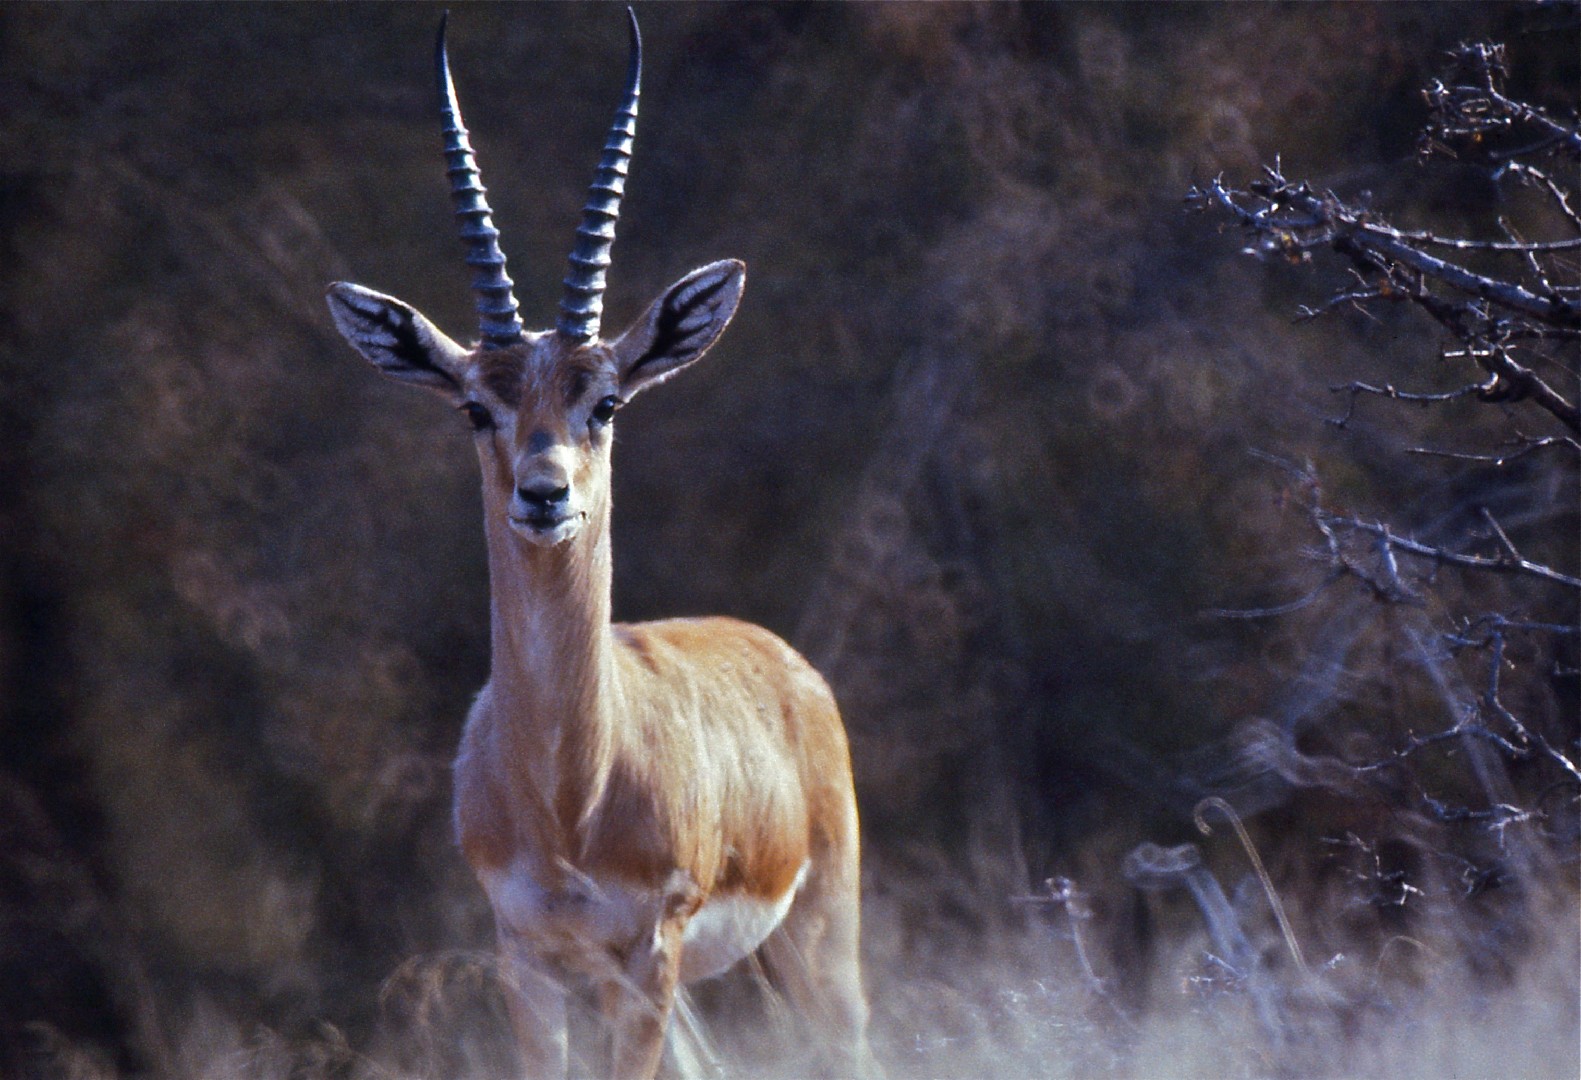 Slender gazelles (Gazella)